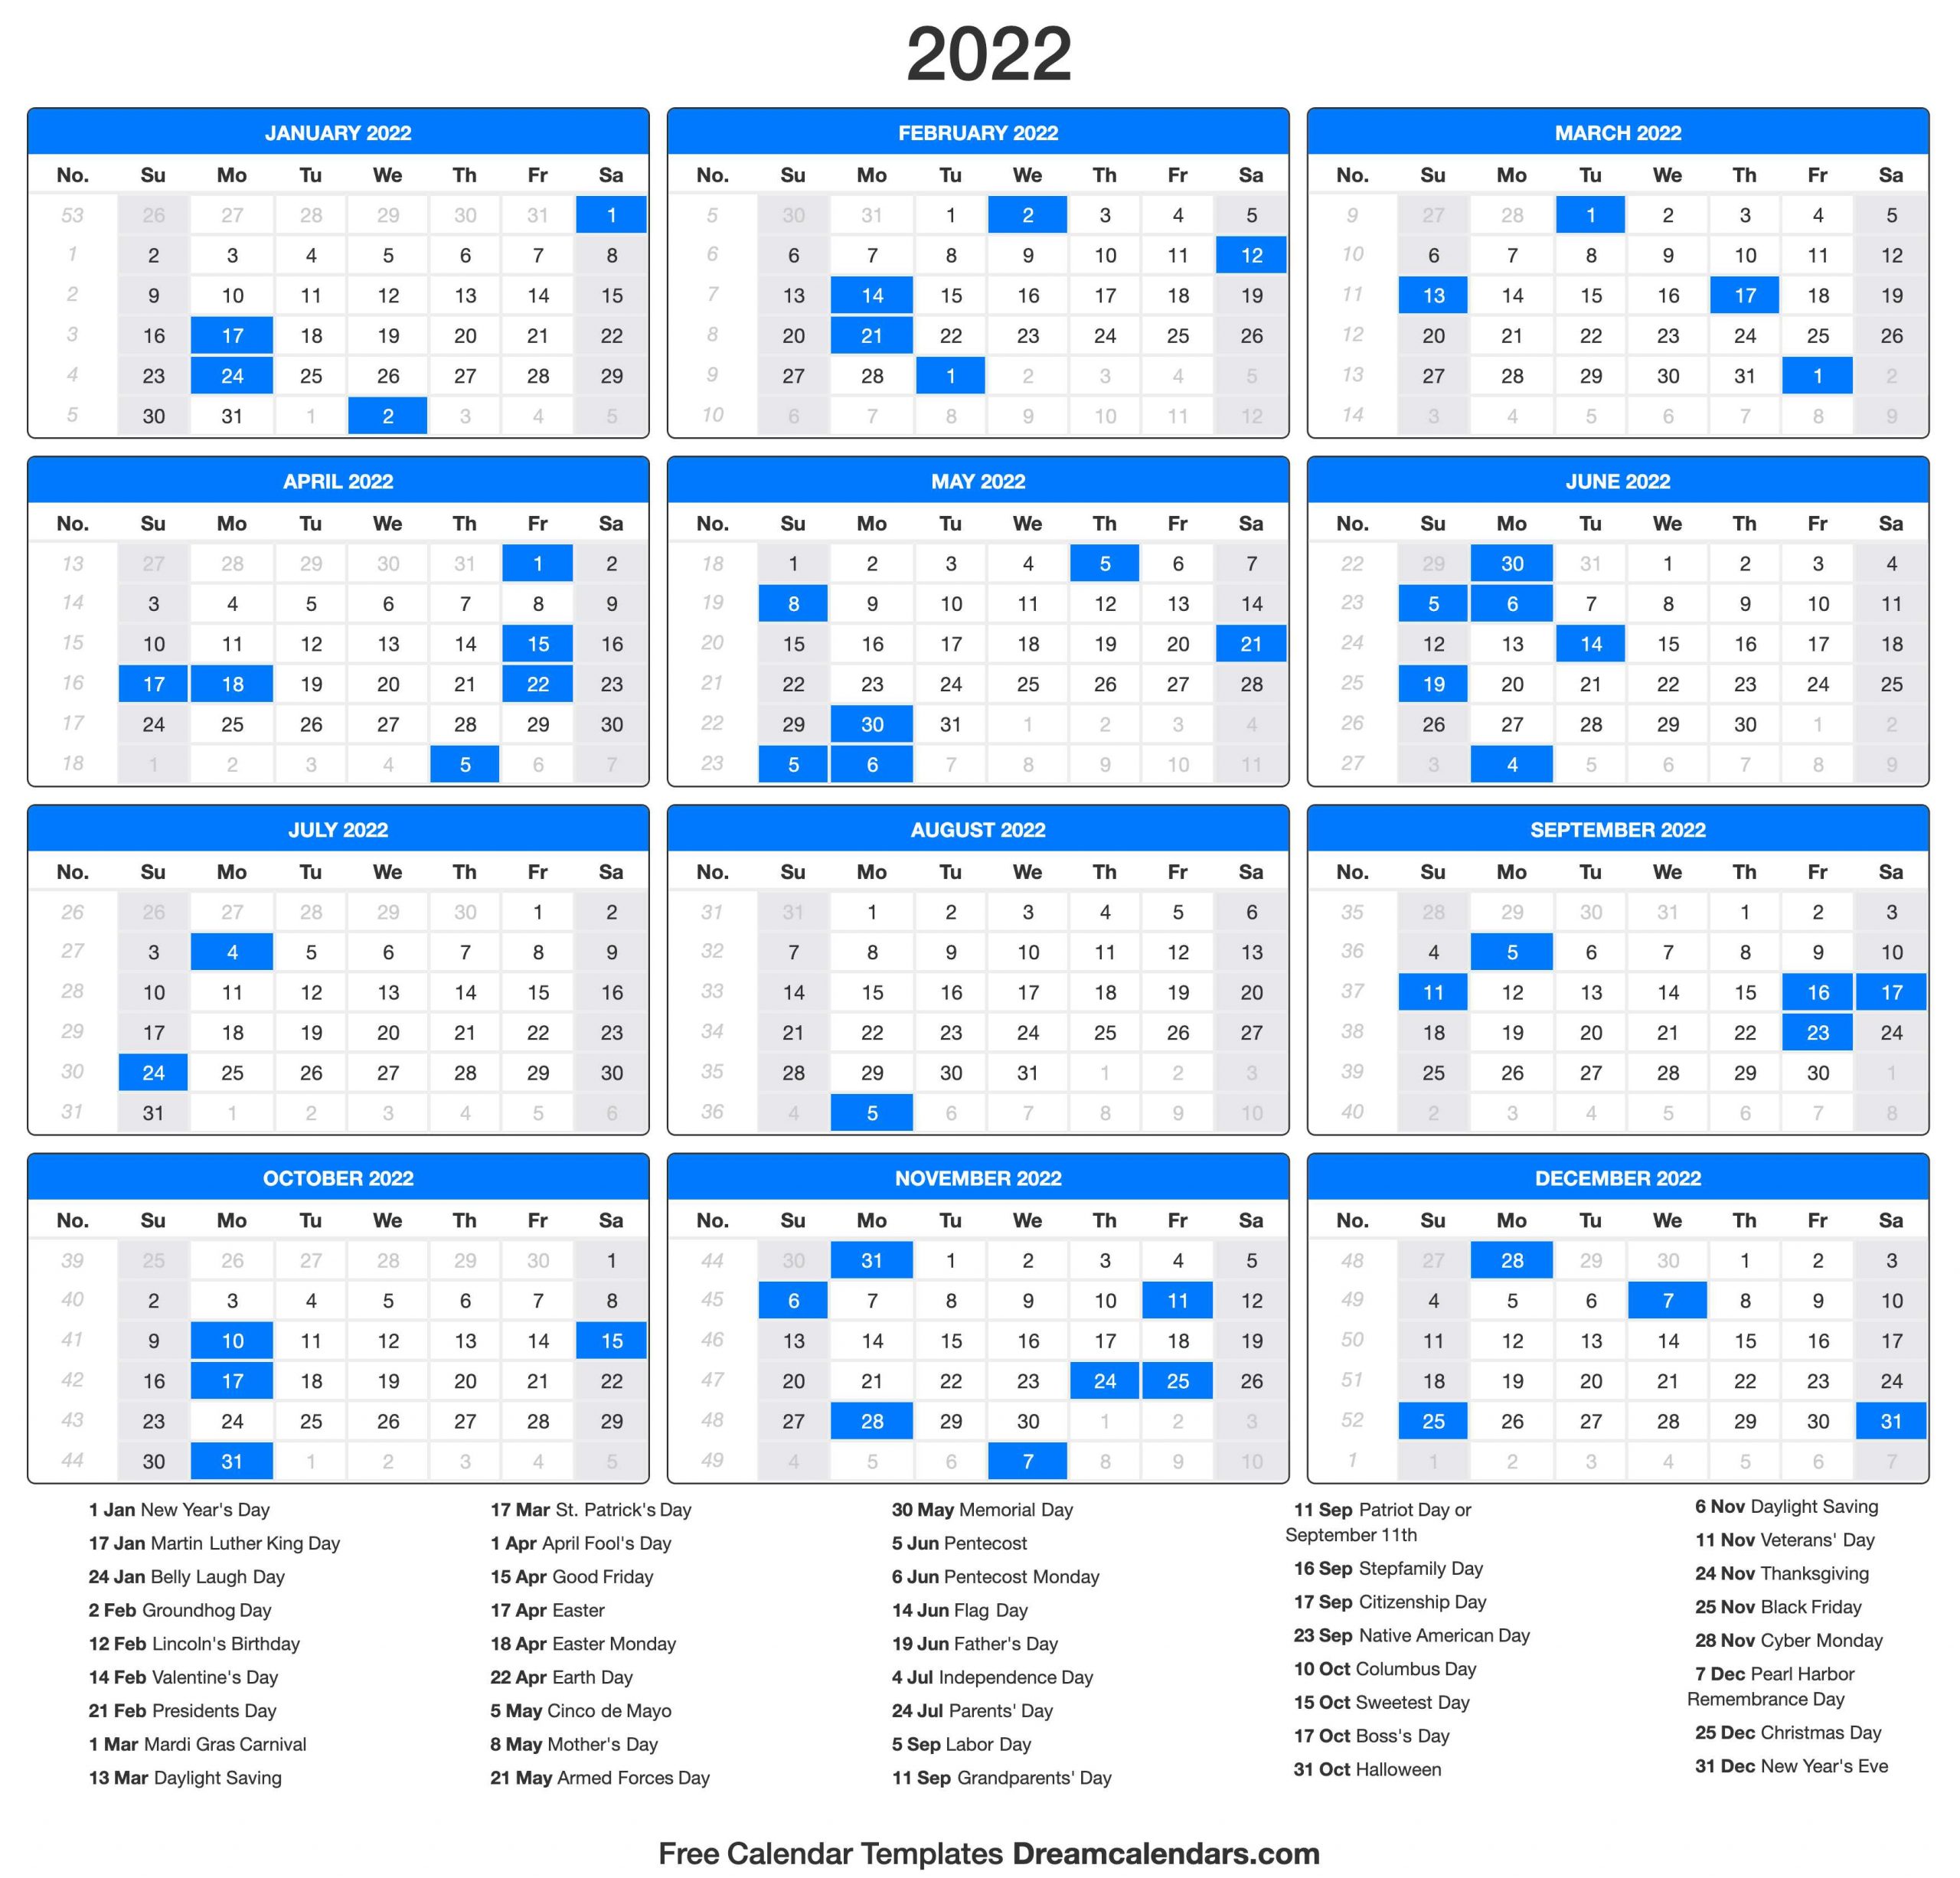 Columbus Day 2022 Calendar March